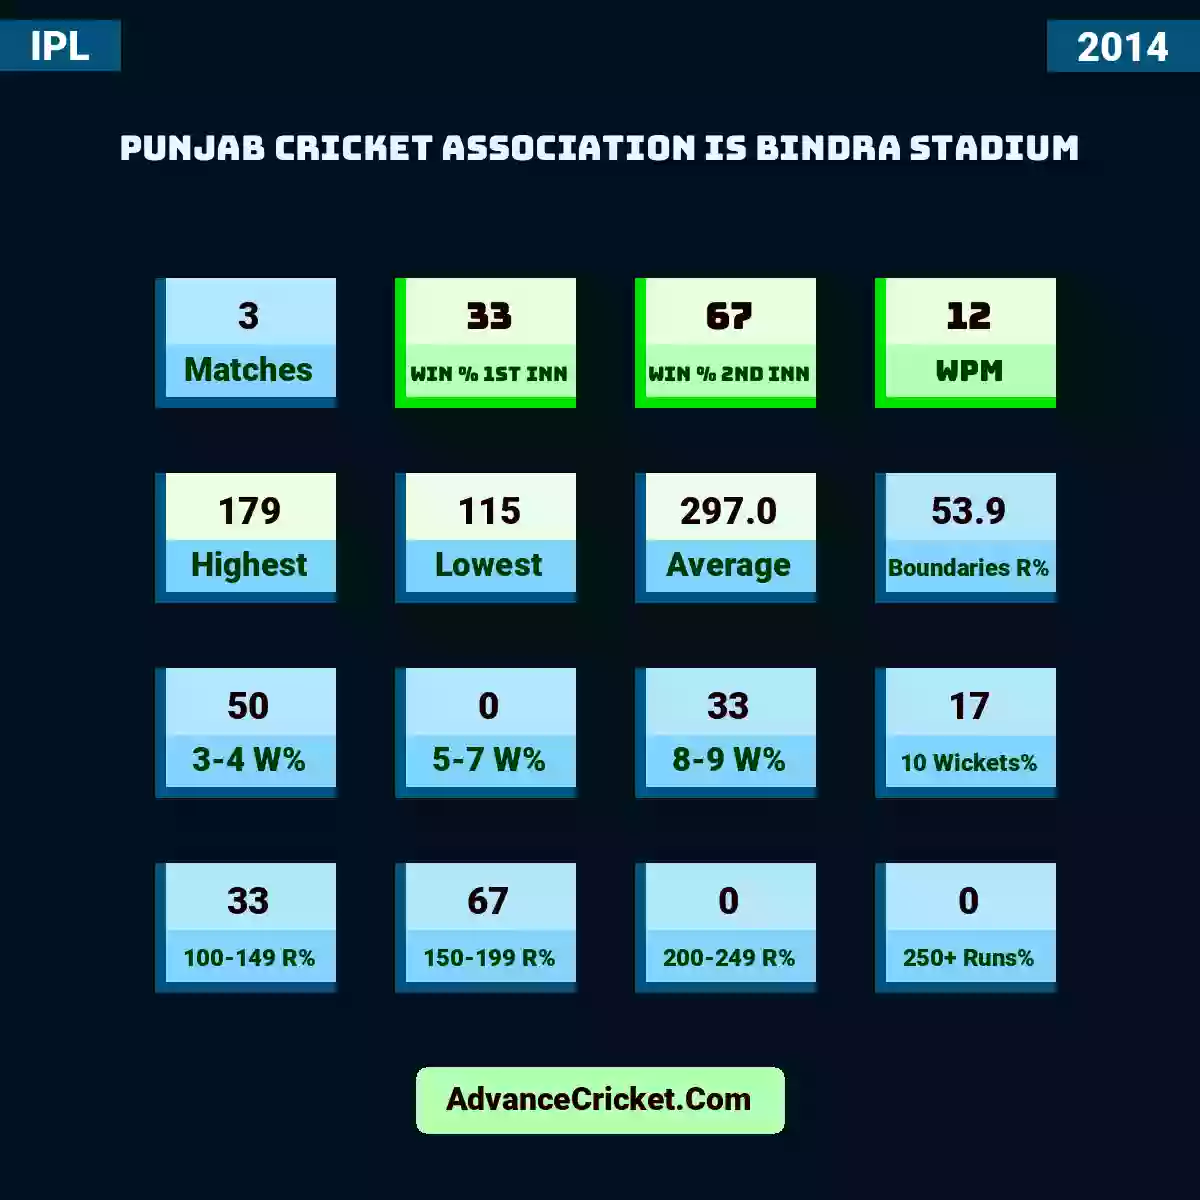 Image showing Punjab Cricket Association IS Bindra Stadium with Matches: 3, Win % 1st Inn: 33, Win % 2nd Inn: 67, WPM: 12, Highest: 179, Lowest: 115, Average: 297.0, Boundaries R%: 53.9, 3-4 W%: 50, 5-7 W%: 0, 8-9 W%: 33, 10 Wickets%: 17, 100-149 R%: 33, 150-199 R%: 67, 200-249 R%: 0, 250+ Runs%: 0.